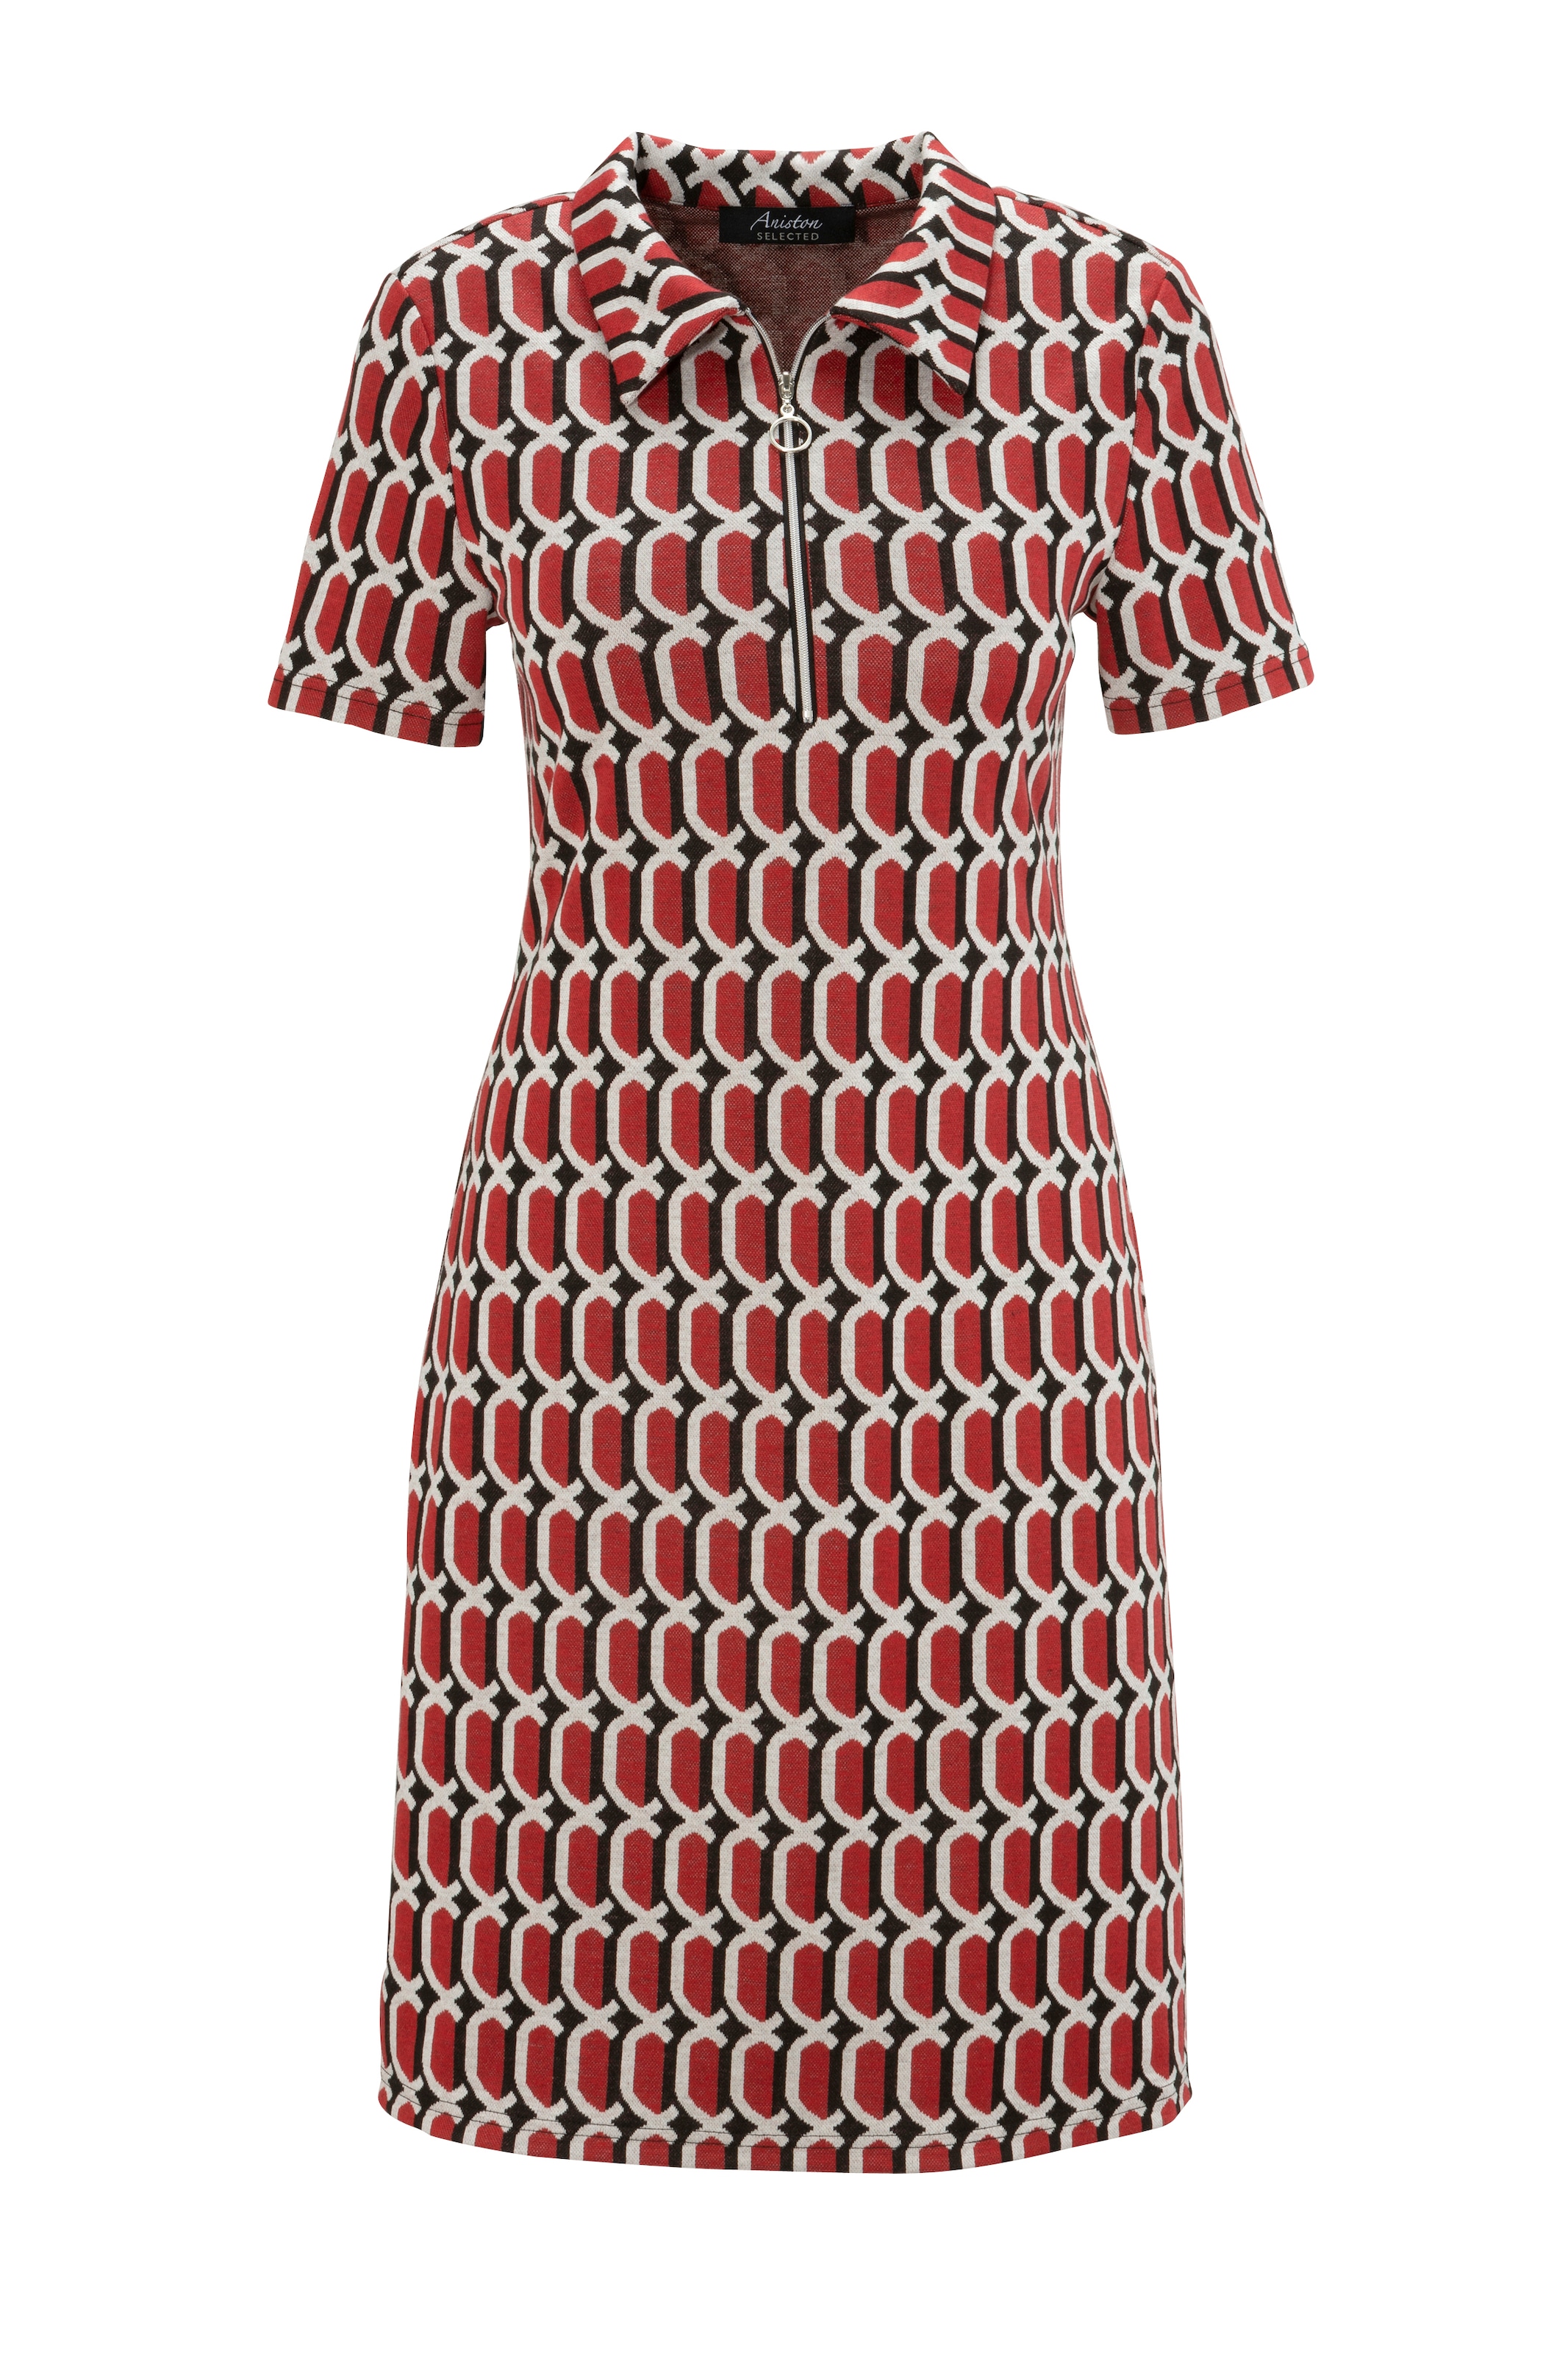 Aniston SELECTED mit KOLLEKTION Jerseykleid, Reißverschluss - NEUE kaufen silberfarbenem